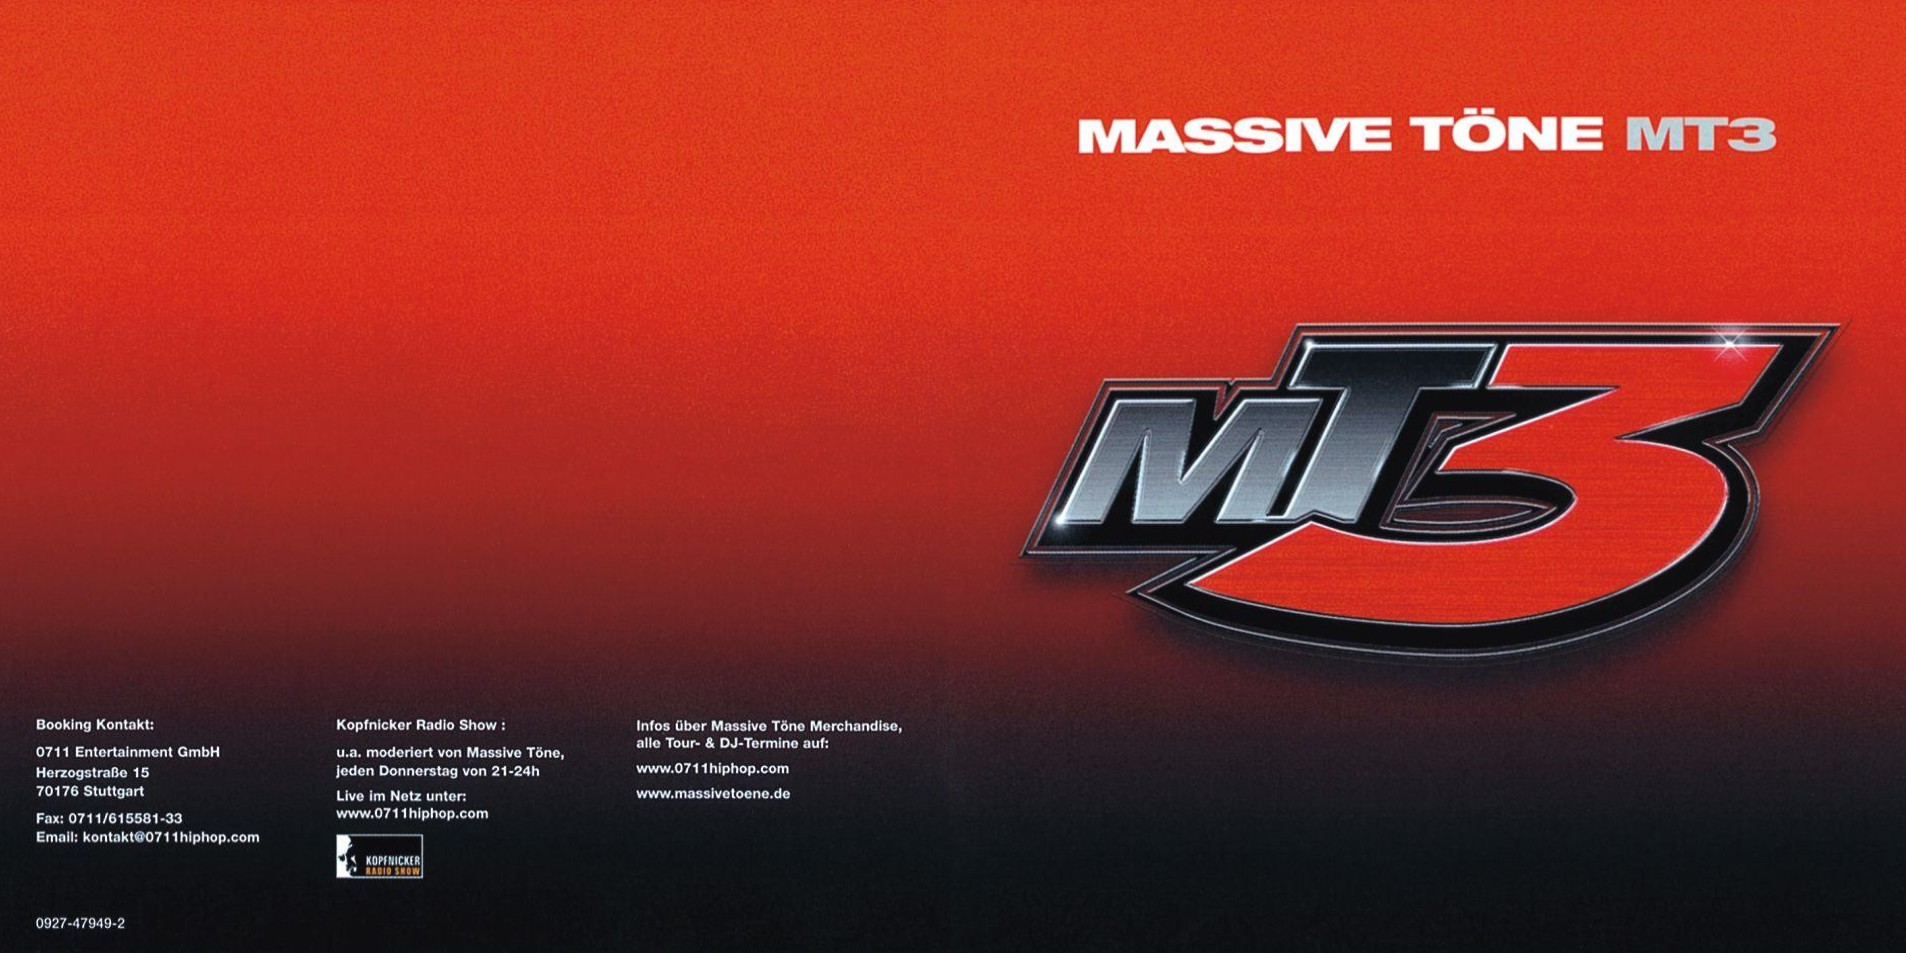 Massive Tne - MT3 2002 - Massive Tne - MT3 - Booklet.jpg